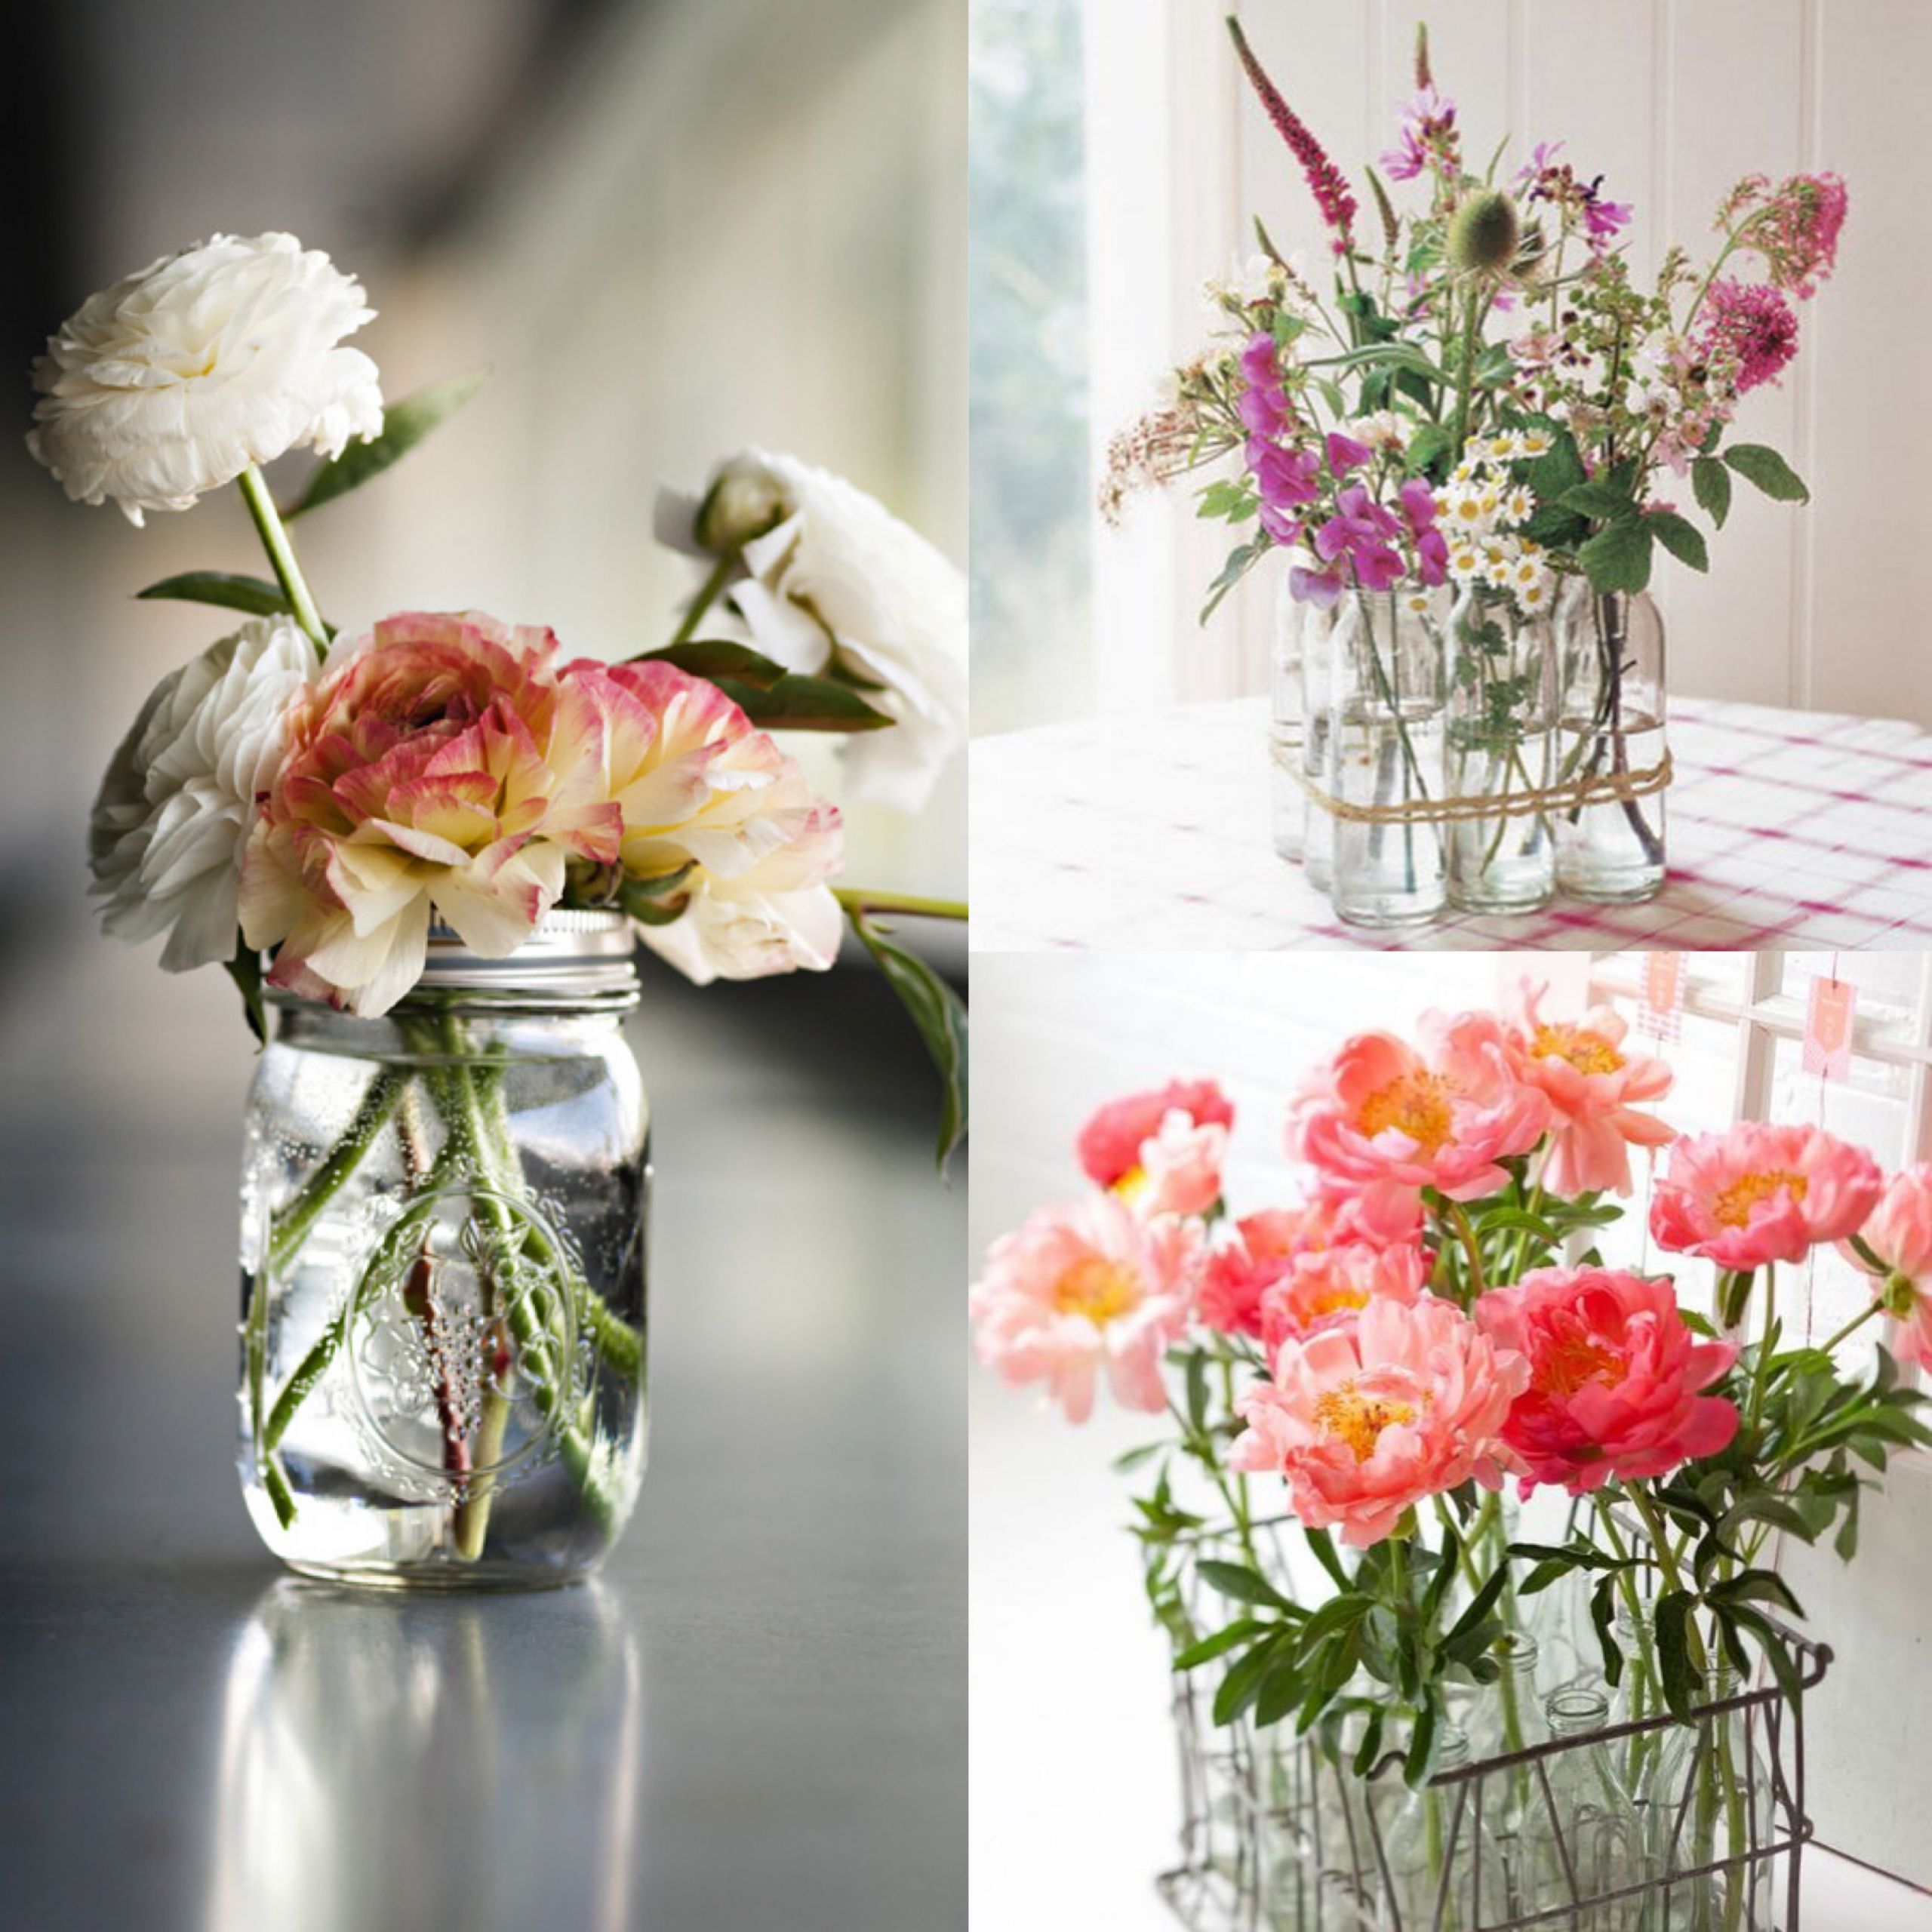 Diy Wedding Flower Arrangements
 How to Make Simple DIY Flower Arrangements